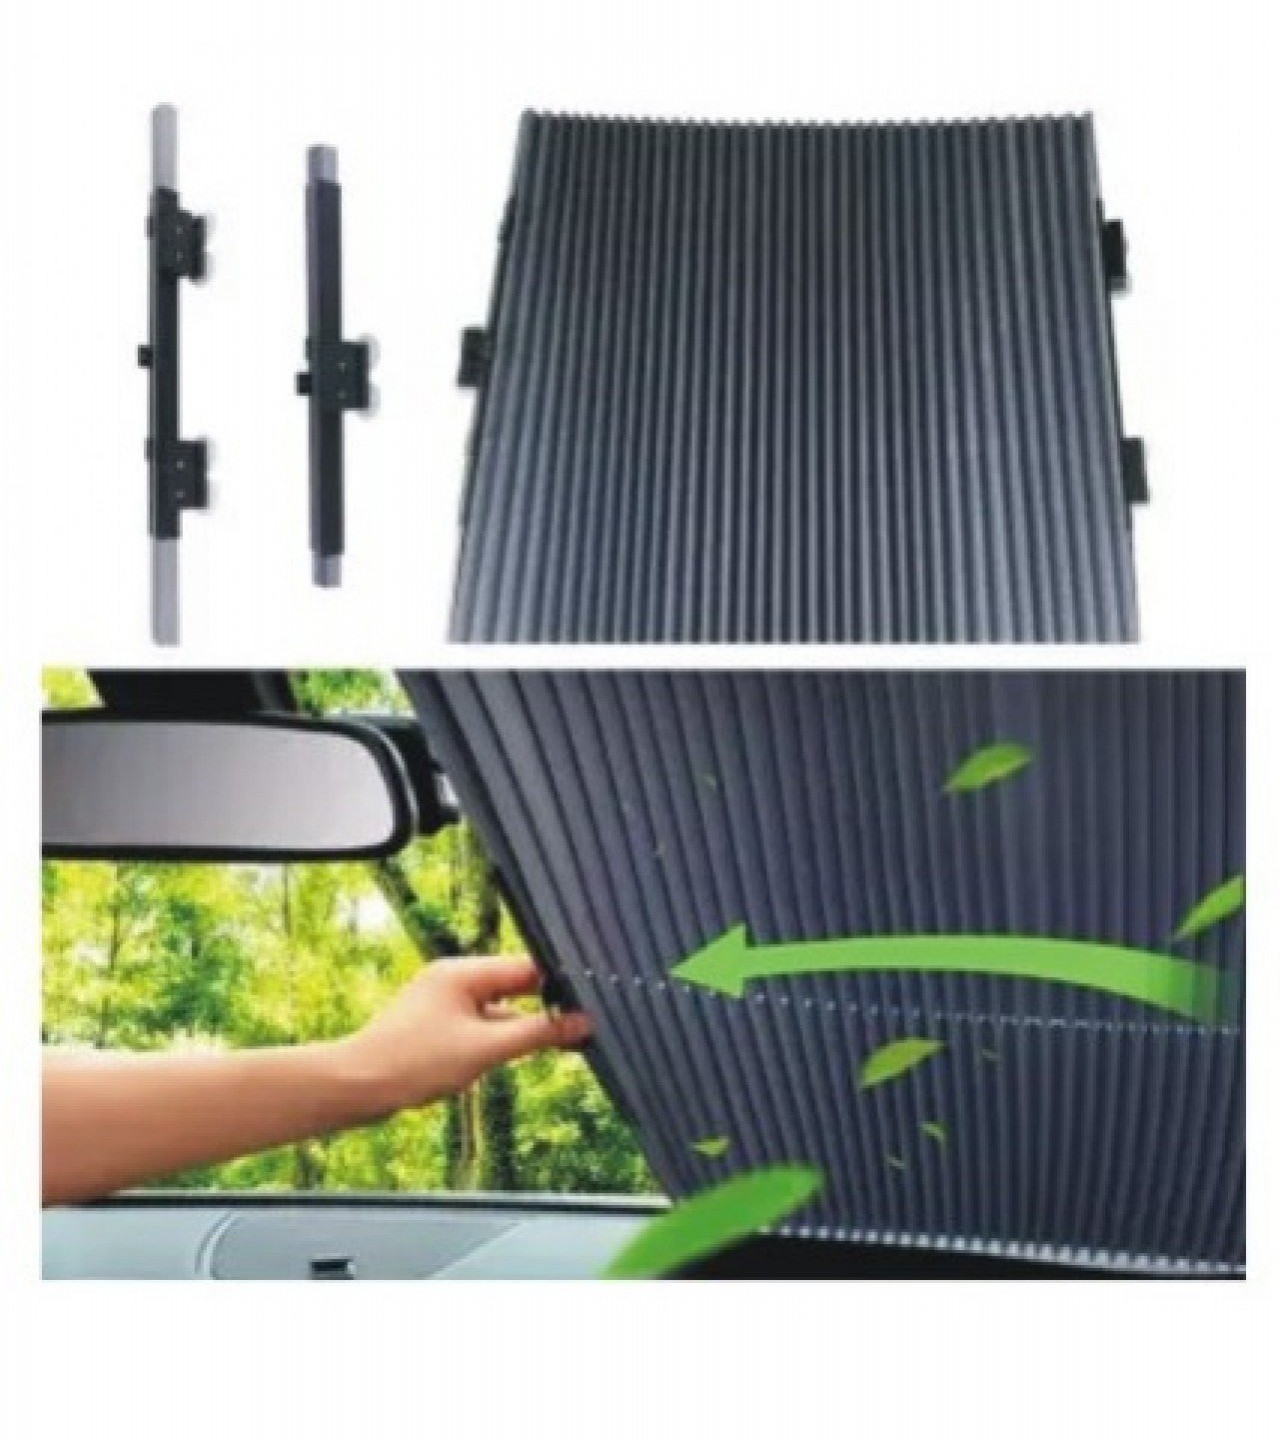 Auto Universal Car Retractable Windshield Sun Shade For Car 45cm